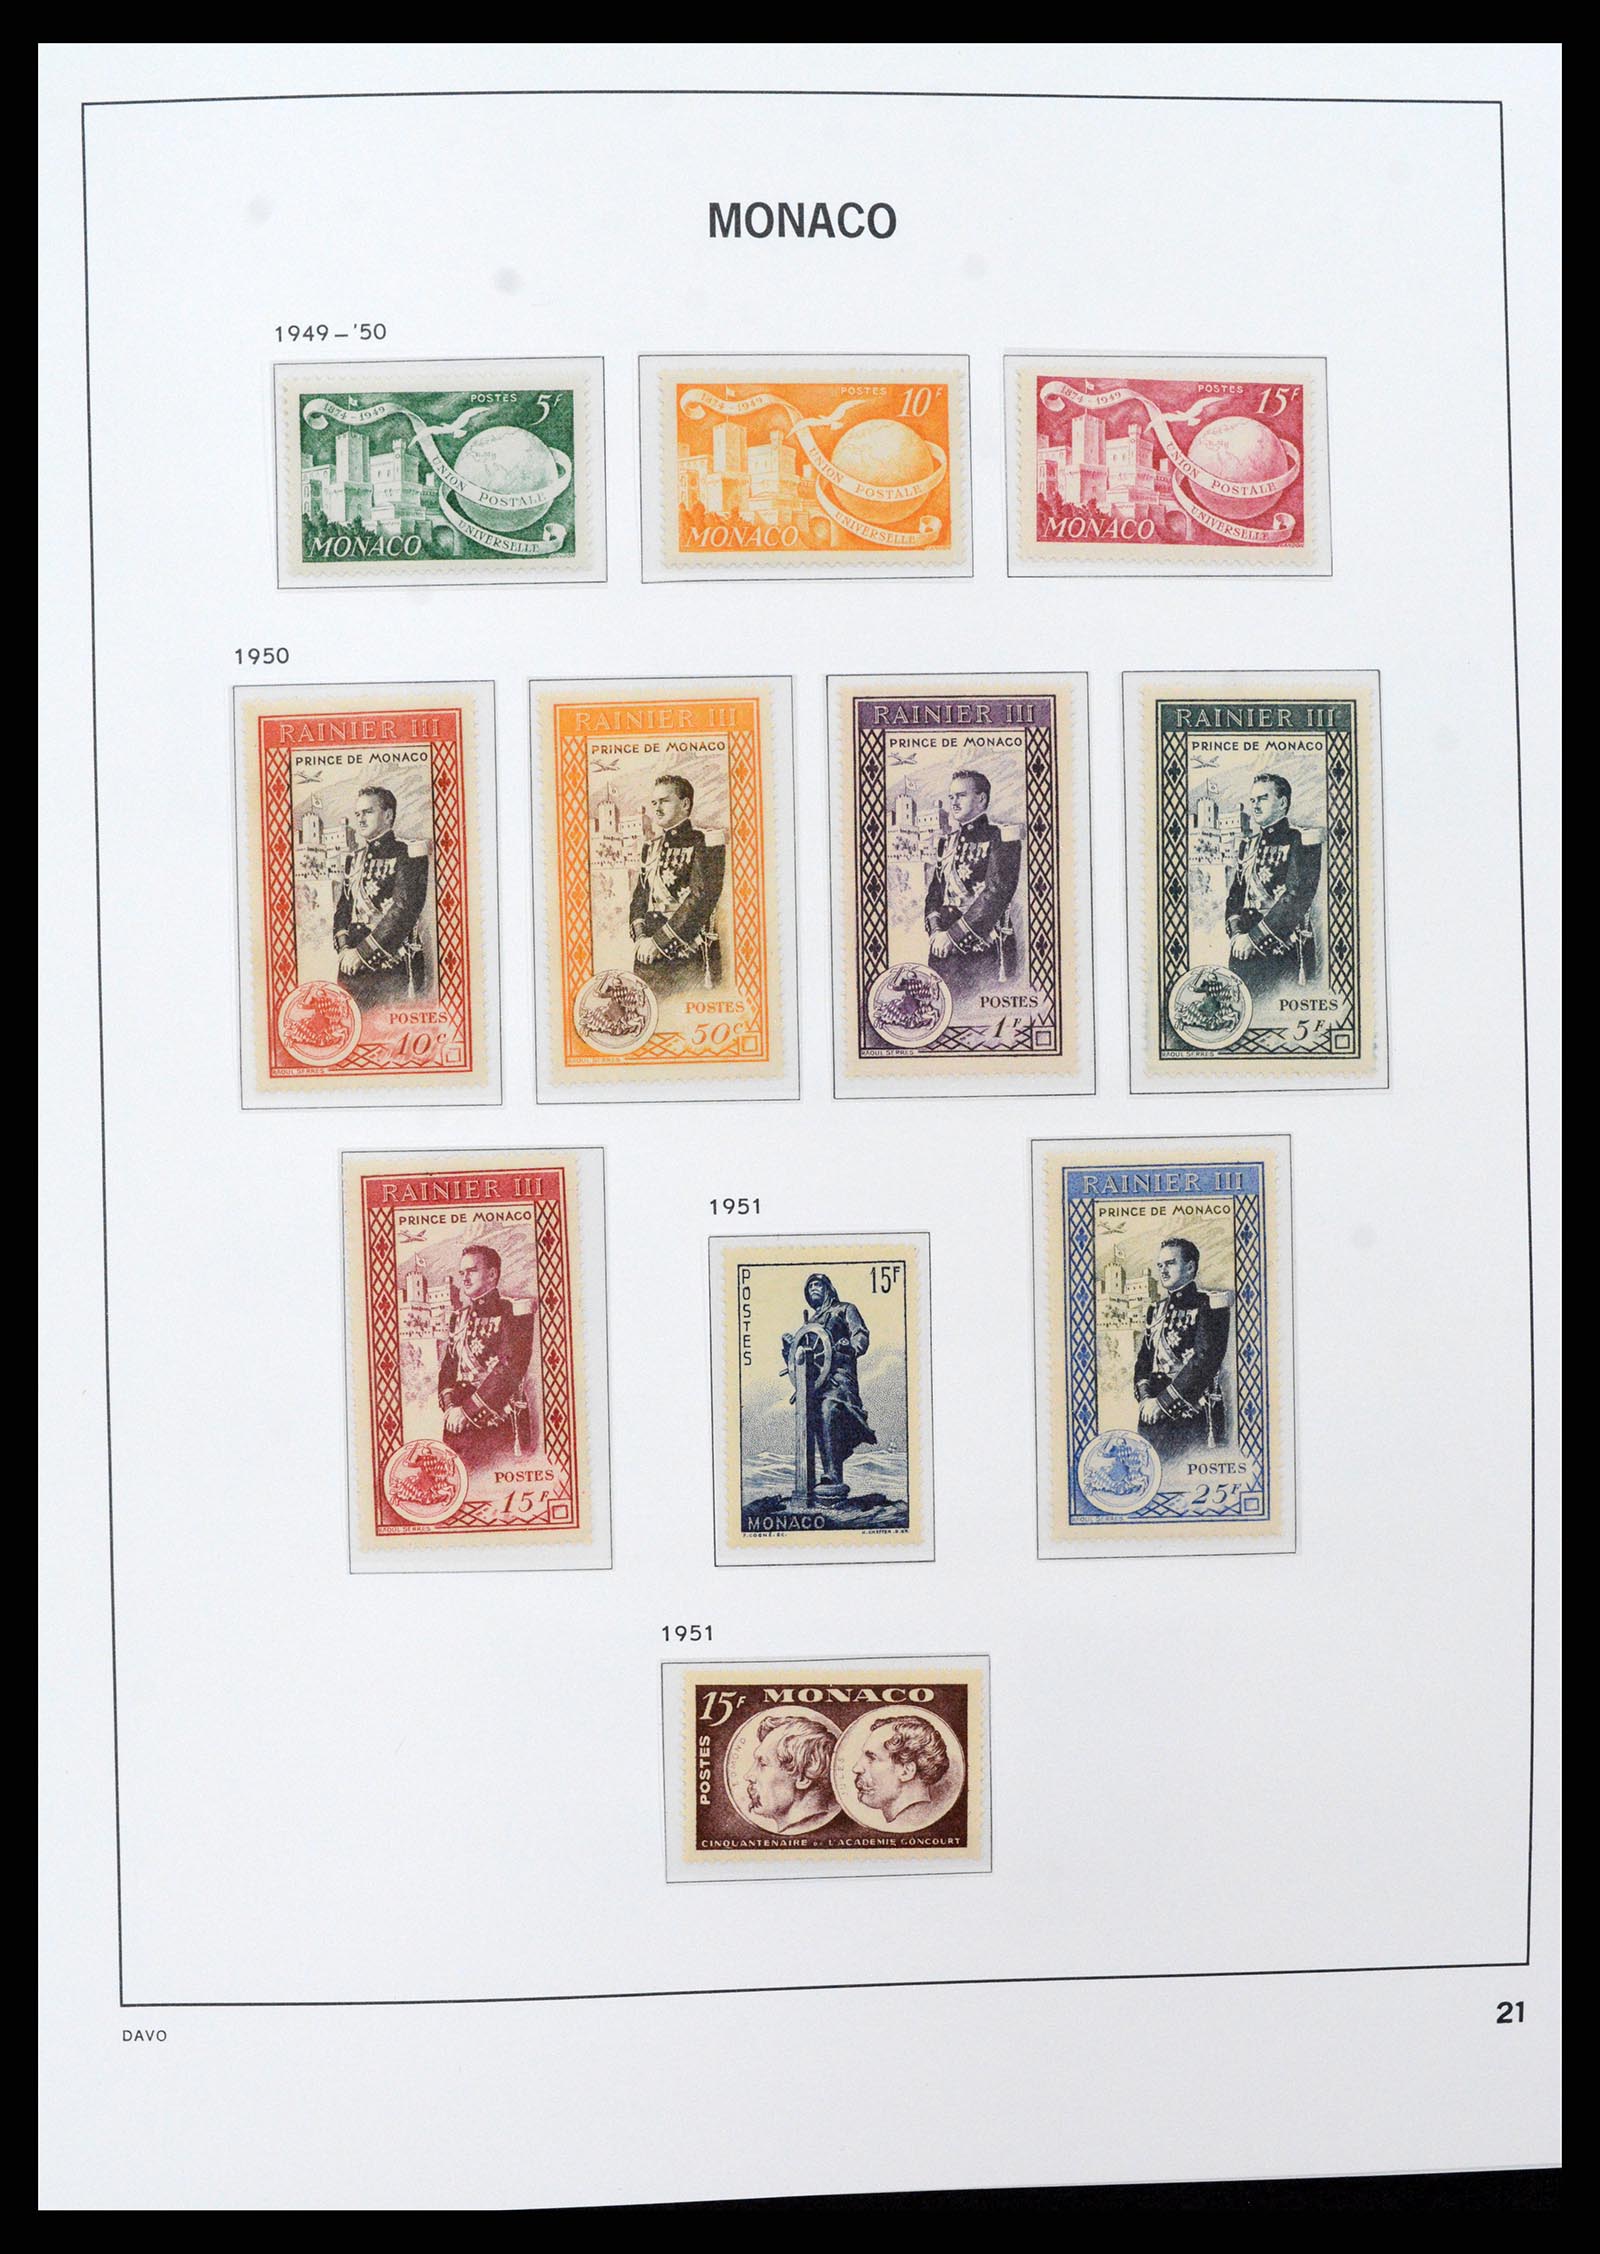 37279 021 - Stamp collection 37279 Monaco 1885-1969.